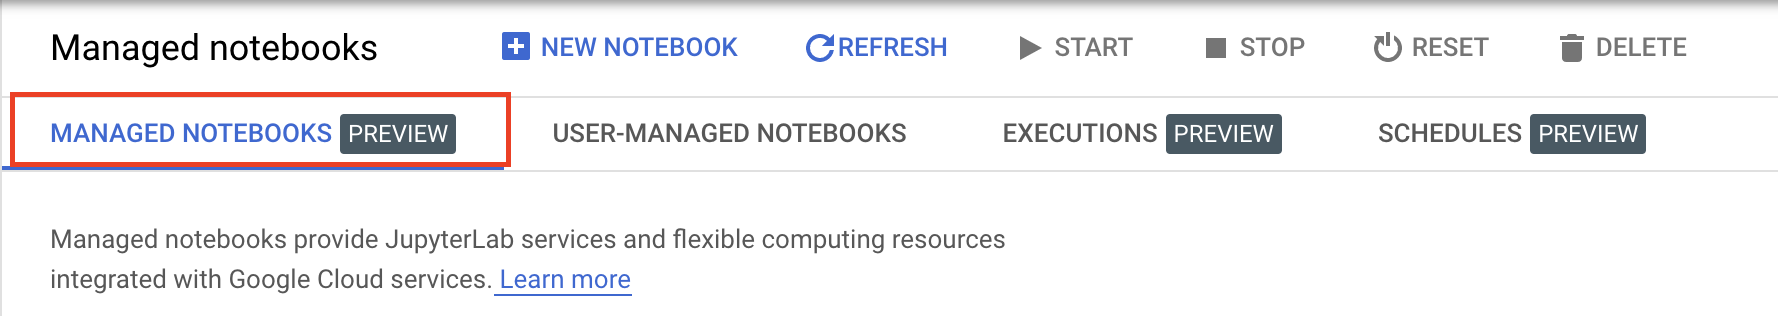 Notebooks_UI